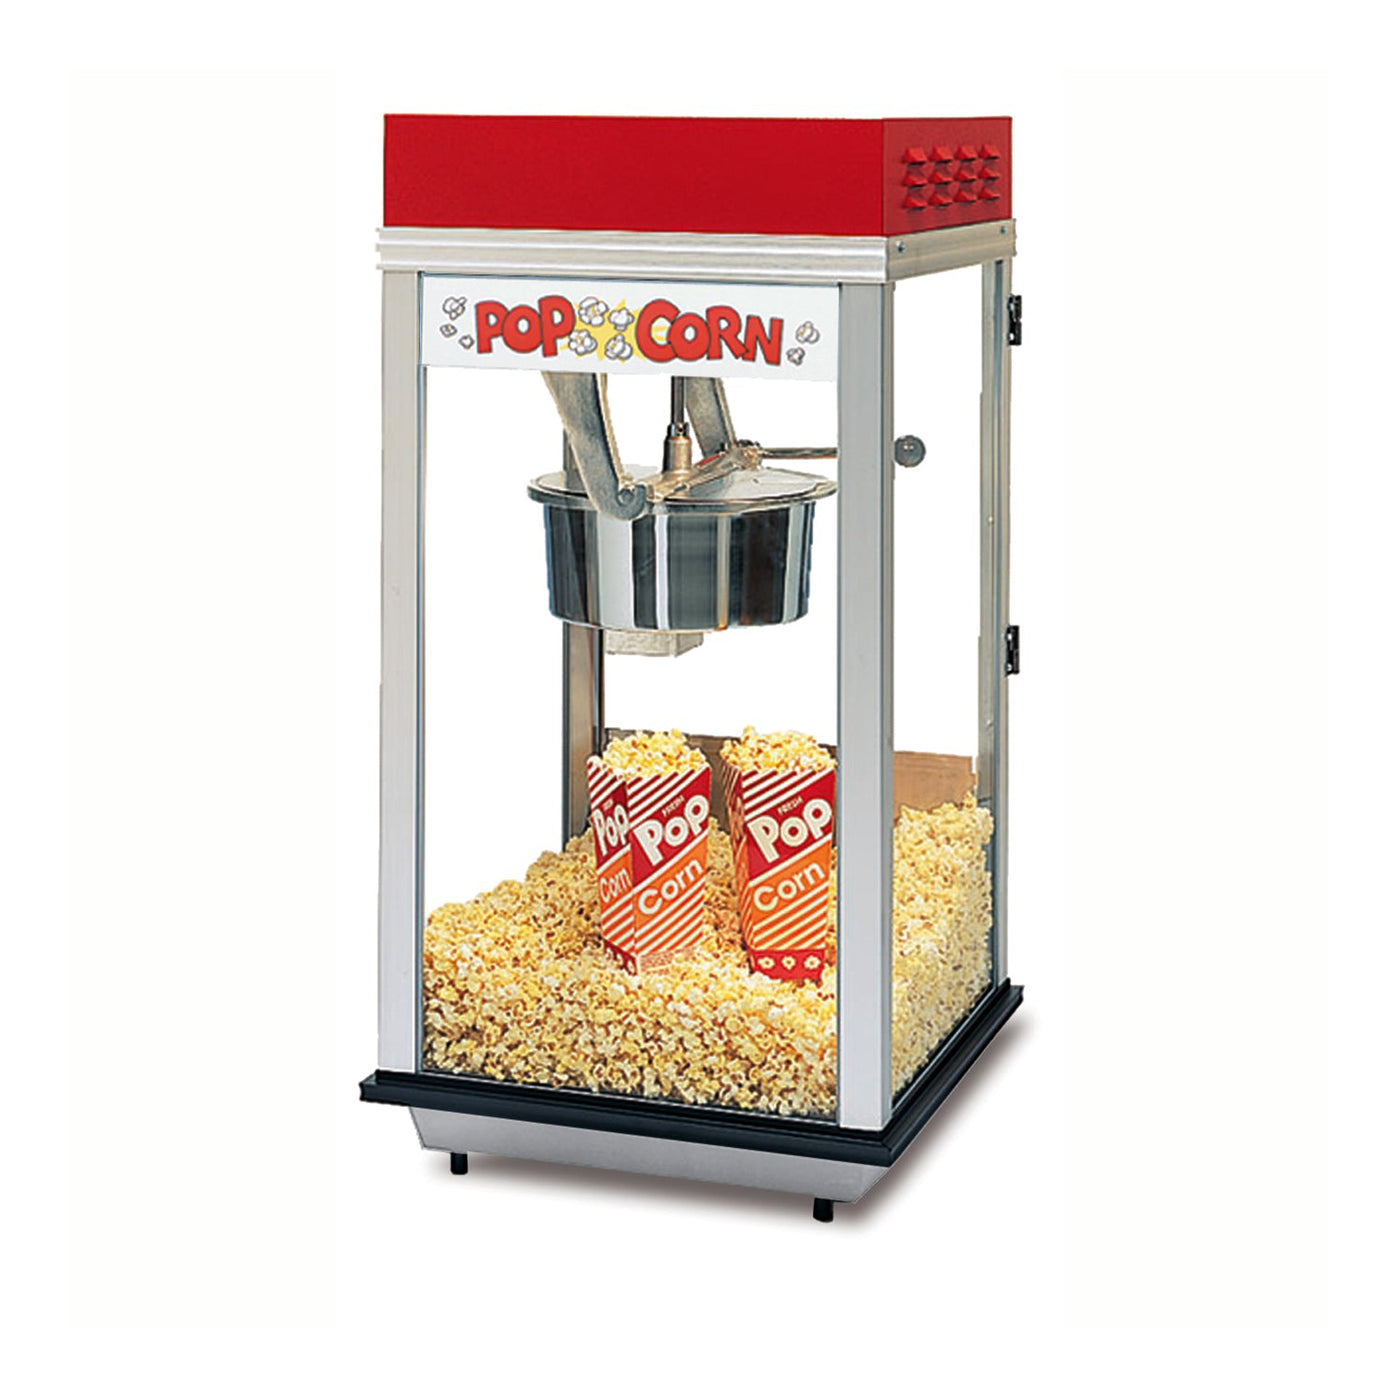 Popcorn Equipment & Supplies Starter Package for a 4-oz. Popper